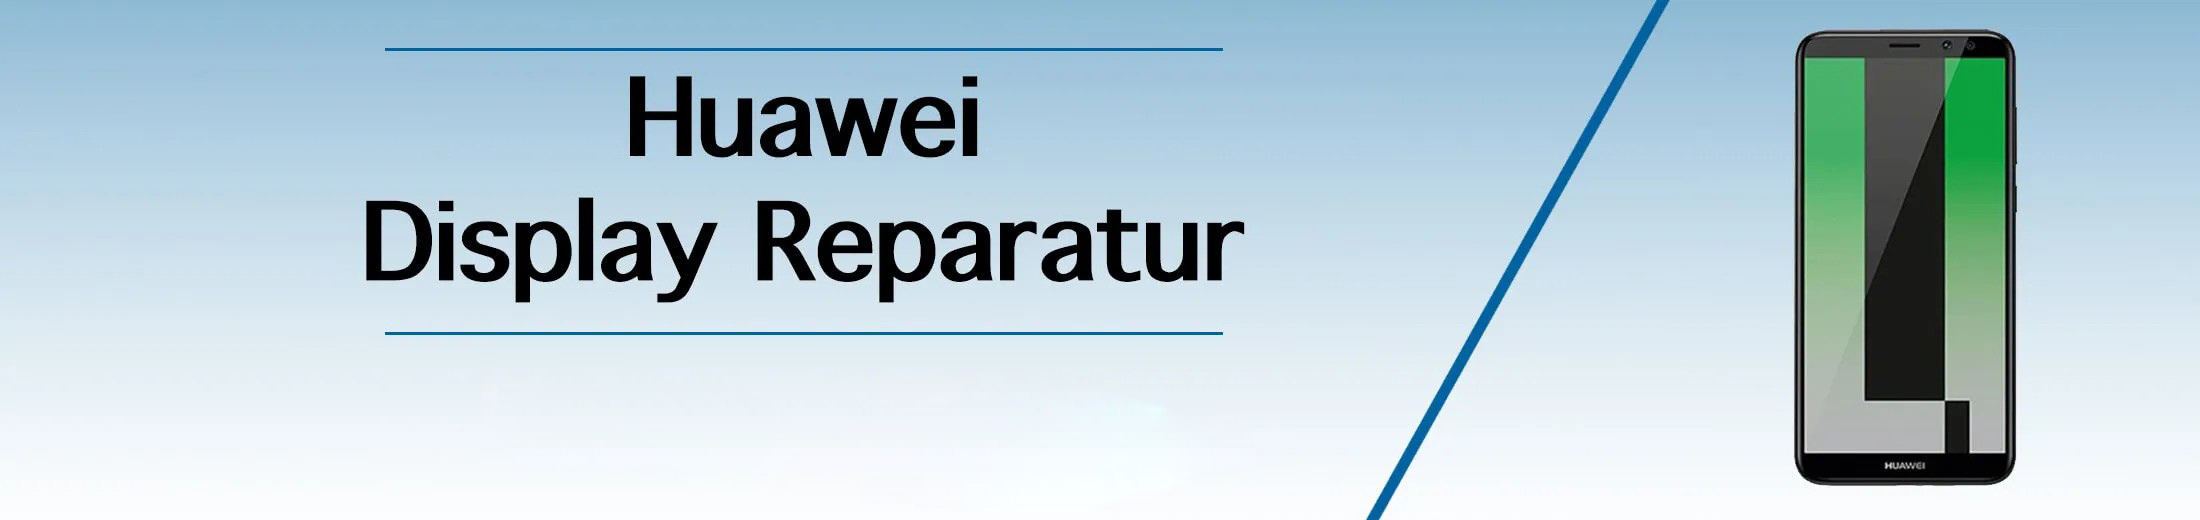 Huawei-Displayreparatur-1_11zon-ezgif.com-webp-to-jpg-converter